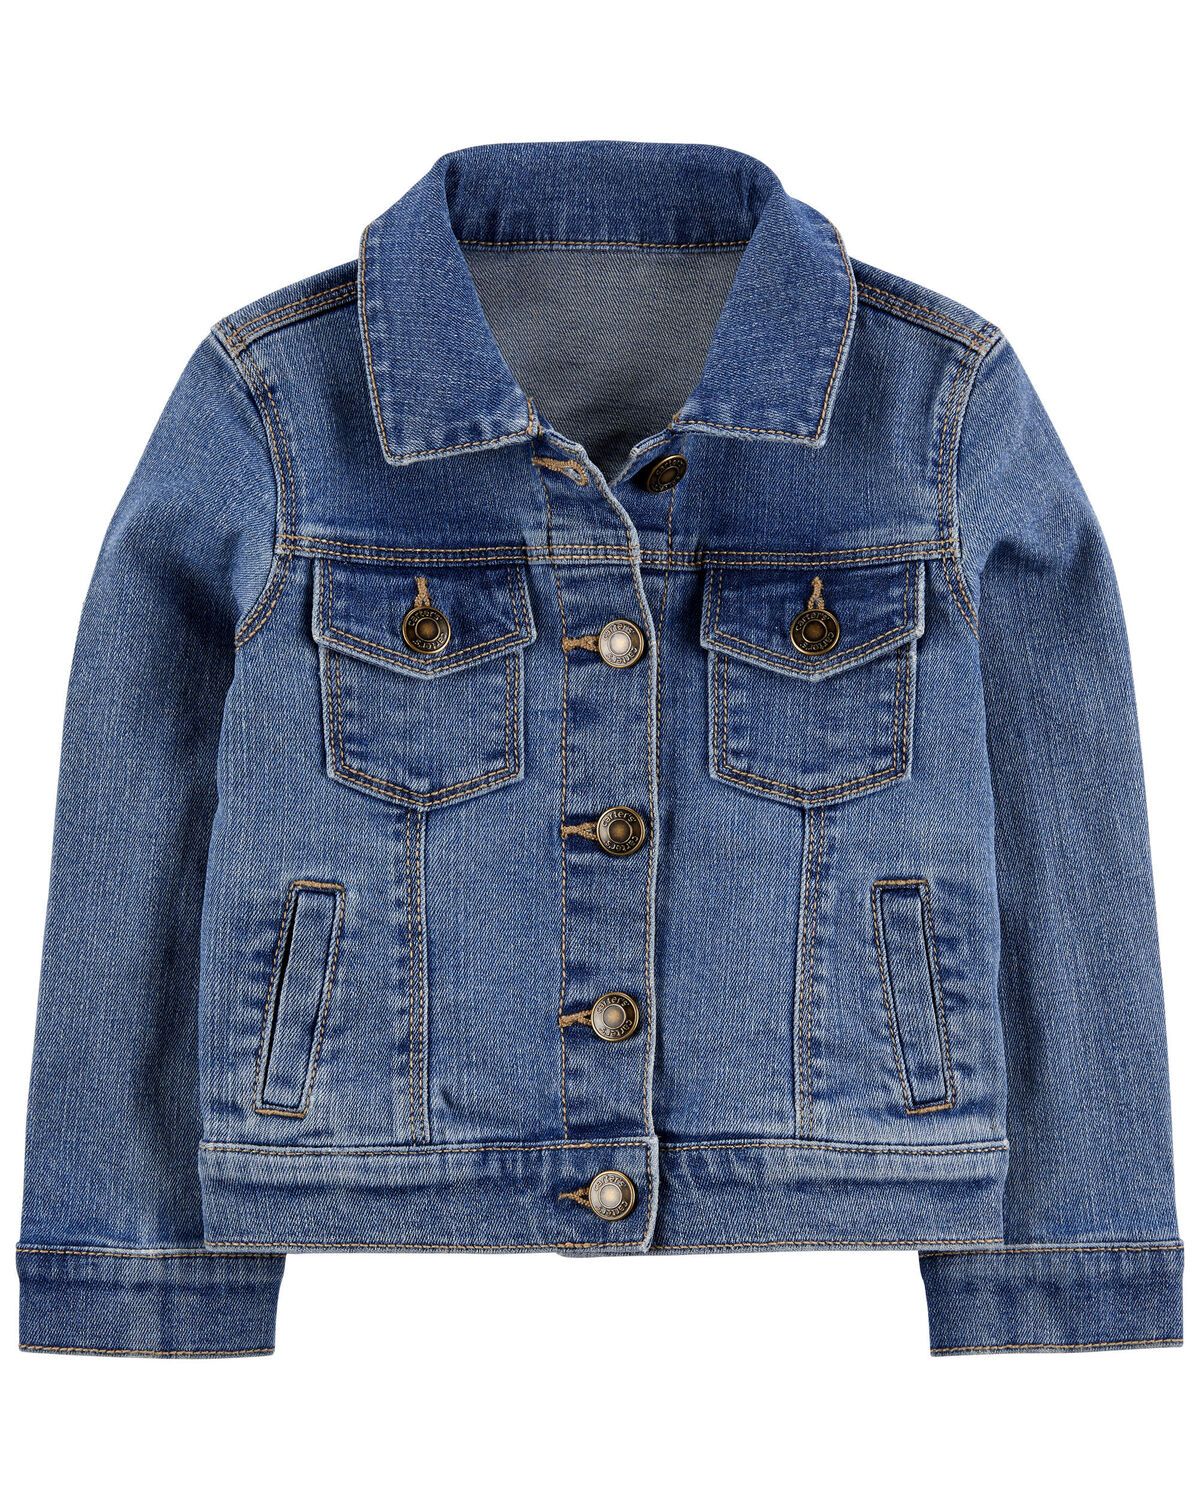 Blue Baby Denim Jacket | carters.com | Carter's